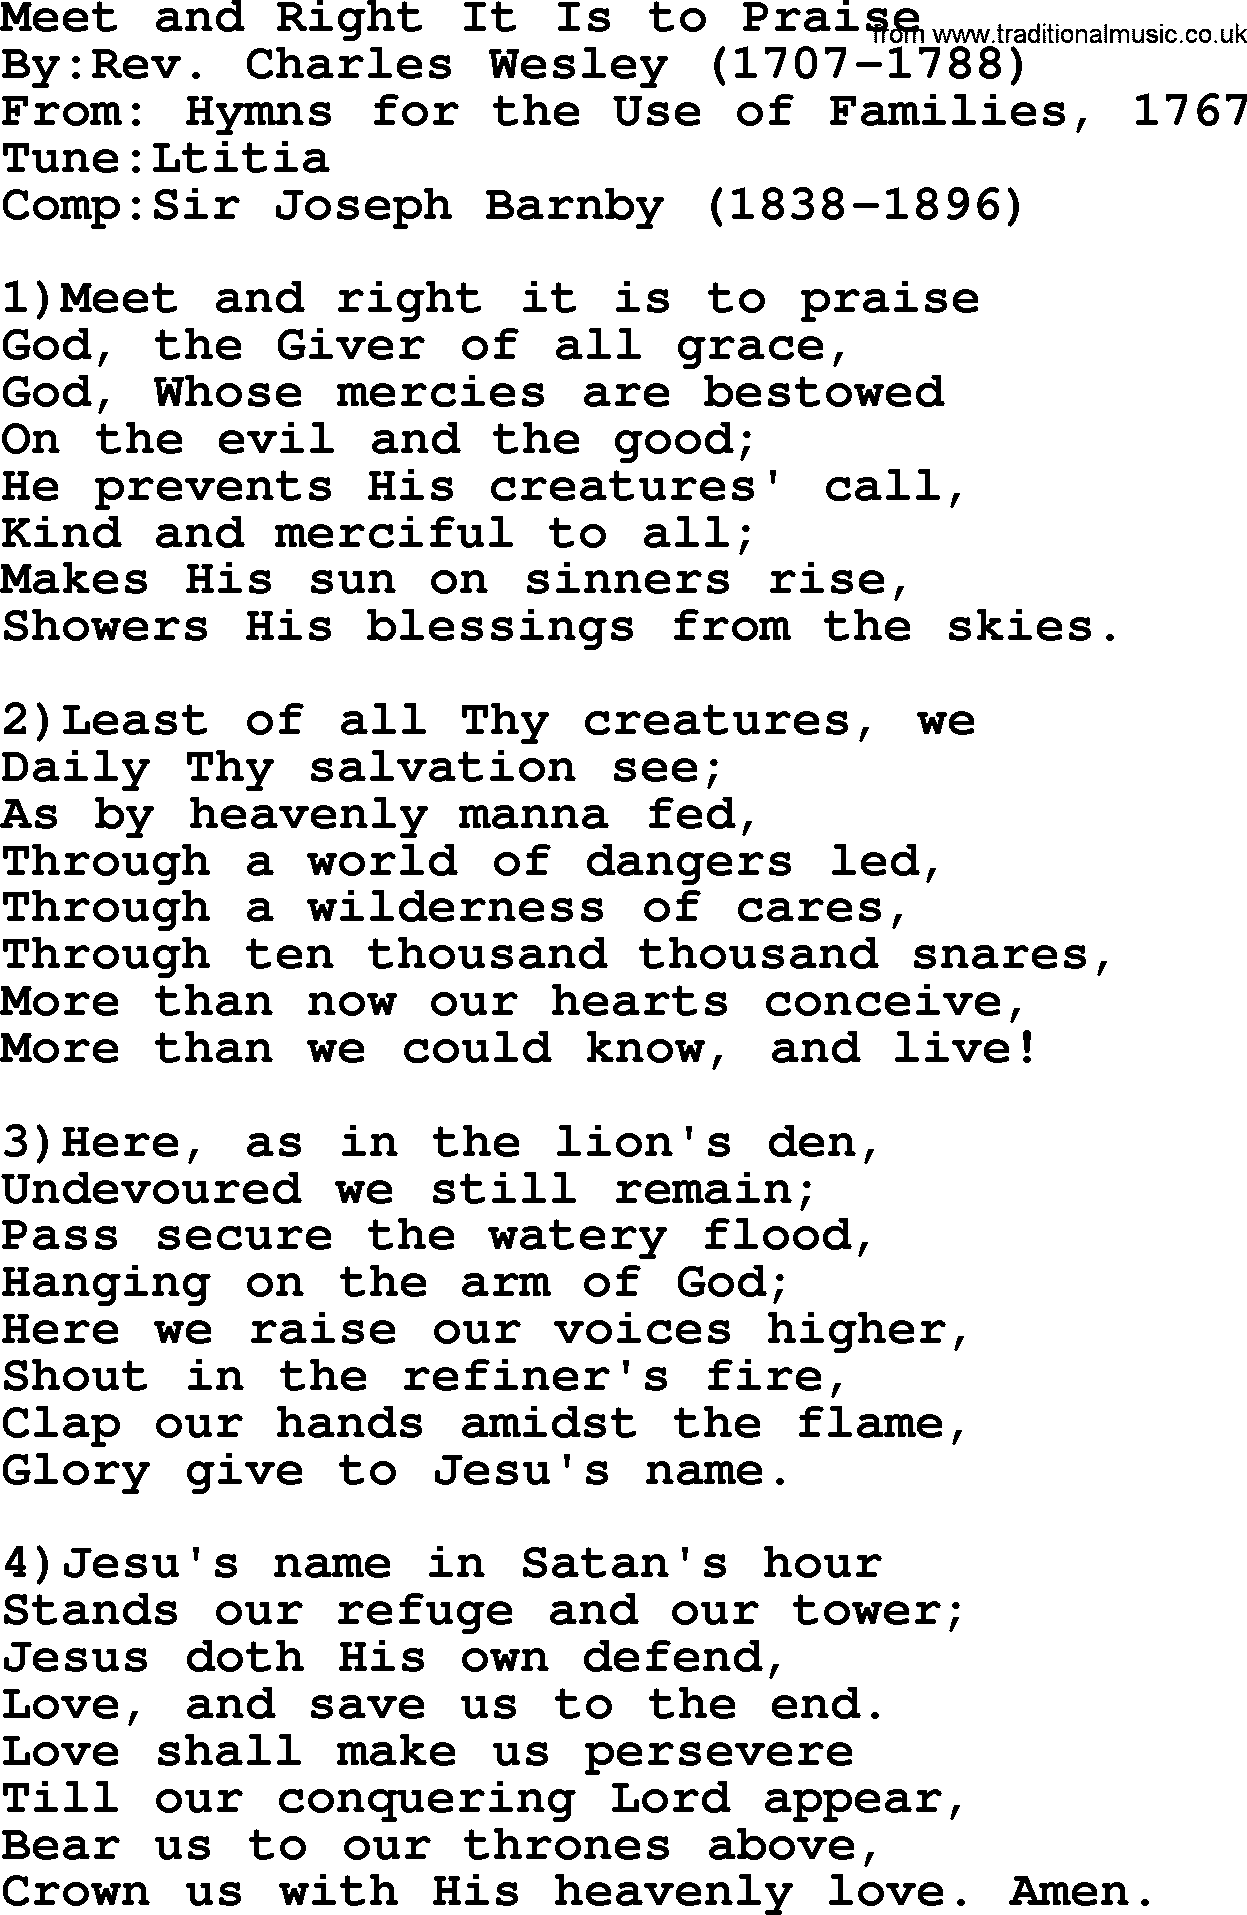 Methodist Hymn: Meet And Right It Is To Praise, lyrics